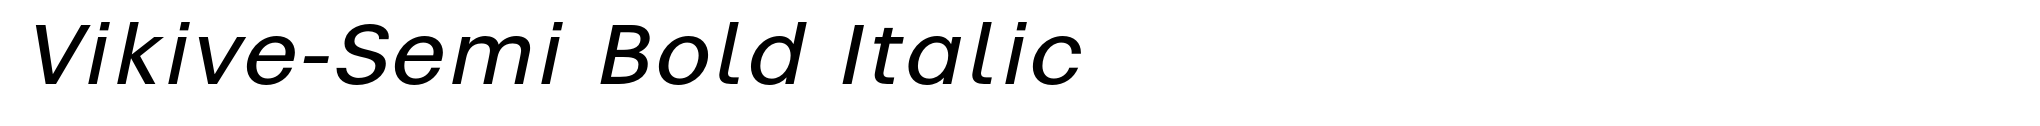 Vikive-Semi Bold Italic image